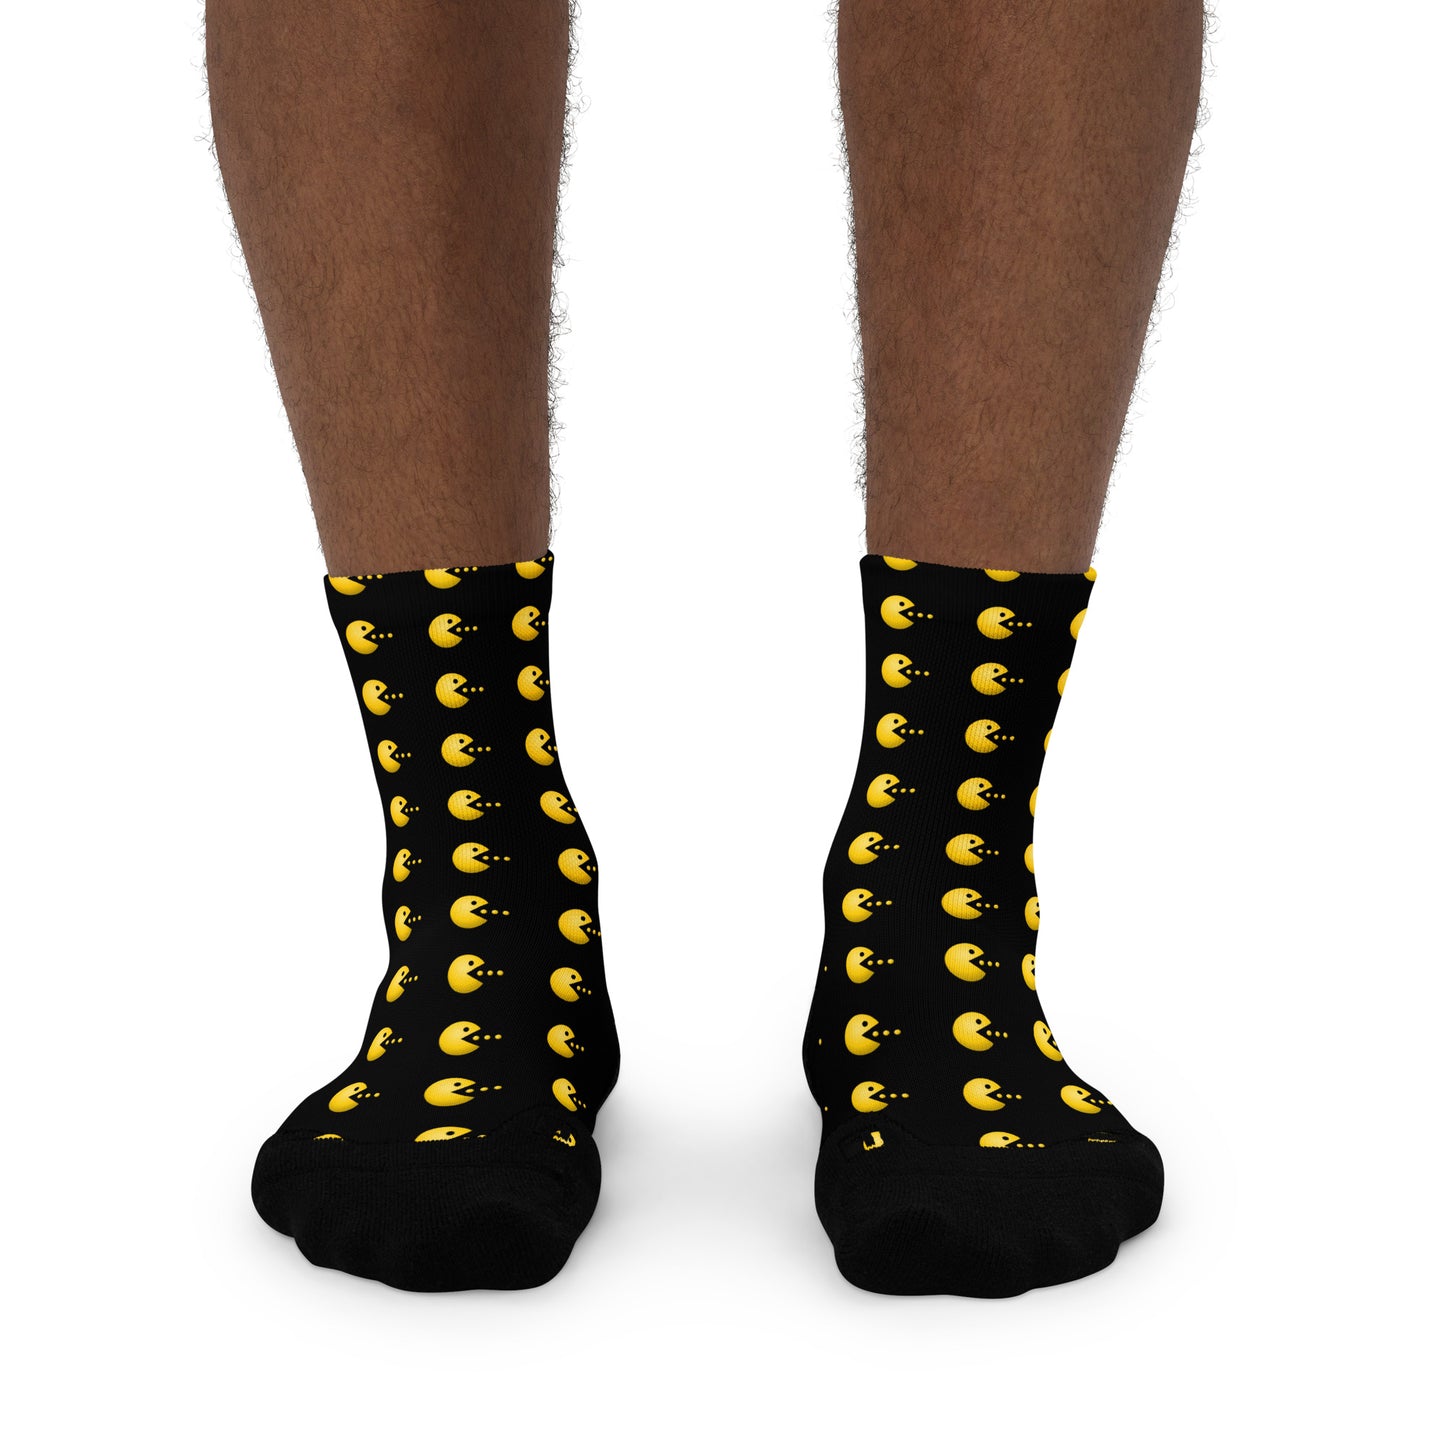 Pac Man ankle socks